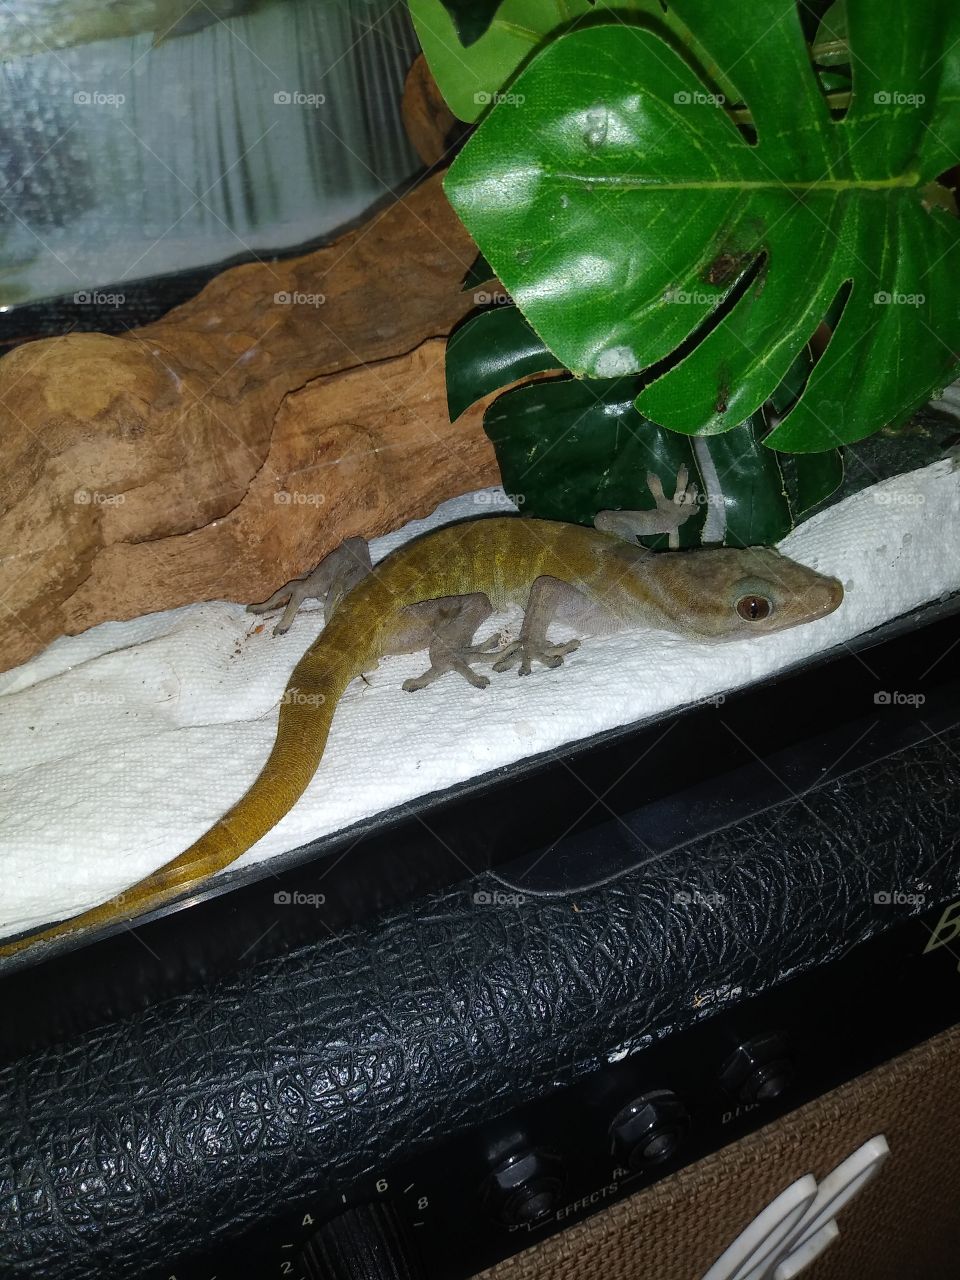 #Reptilelover #Reptileporn#Geck #Goldengecko